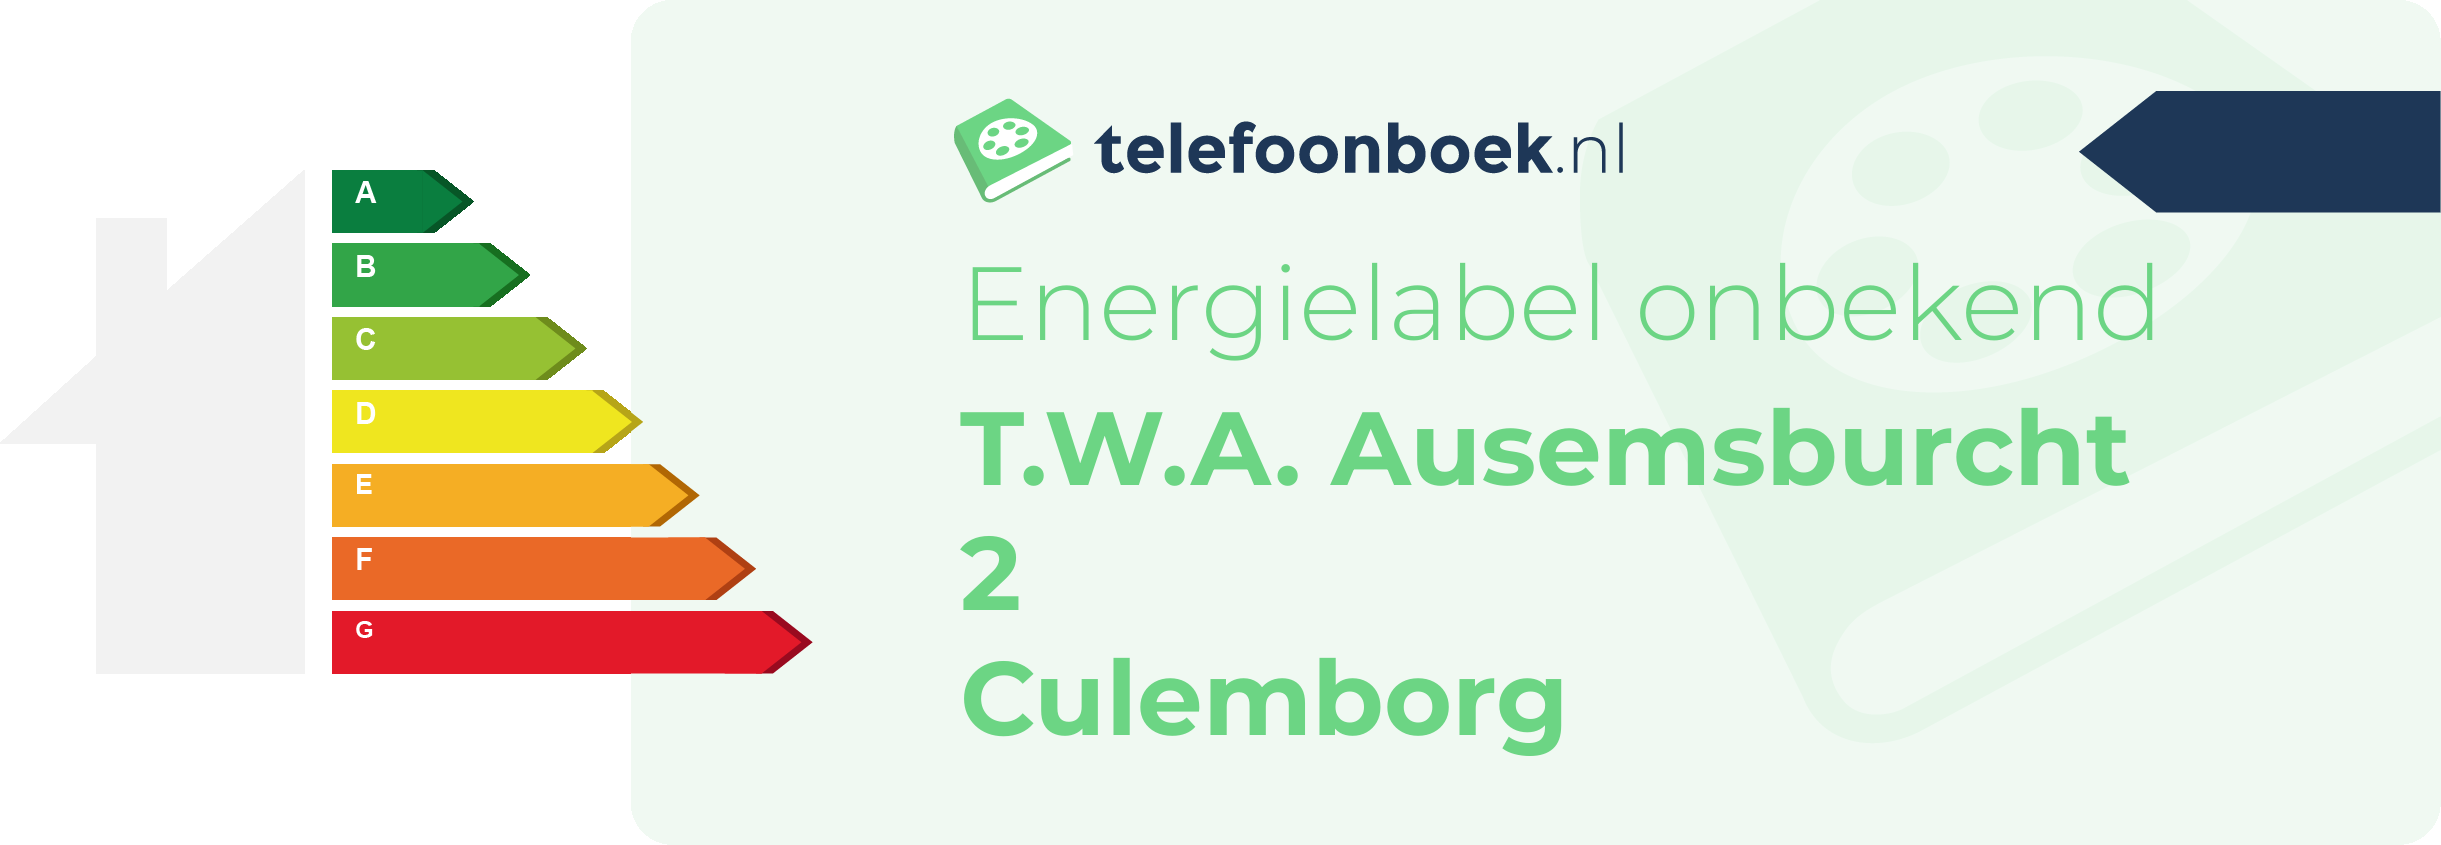 Energielabel T.W.A. Ausemsburcht 2 Culemborg